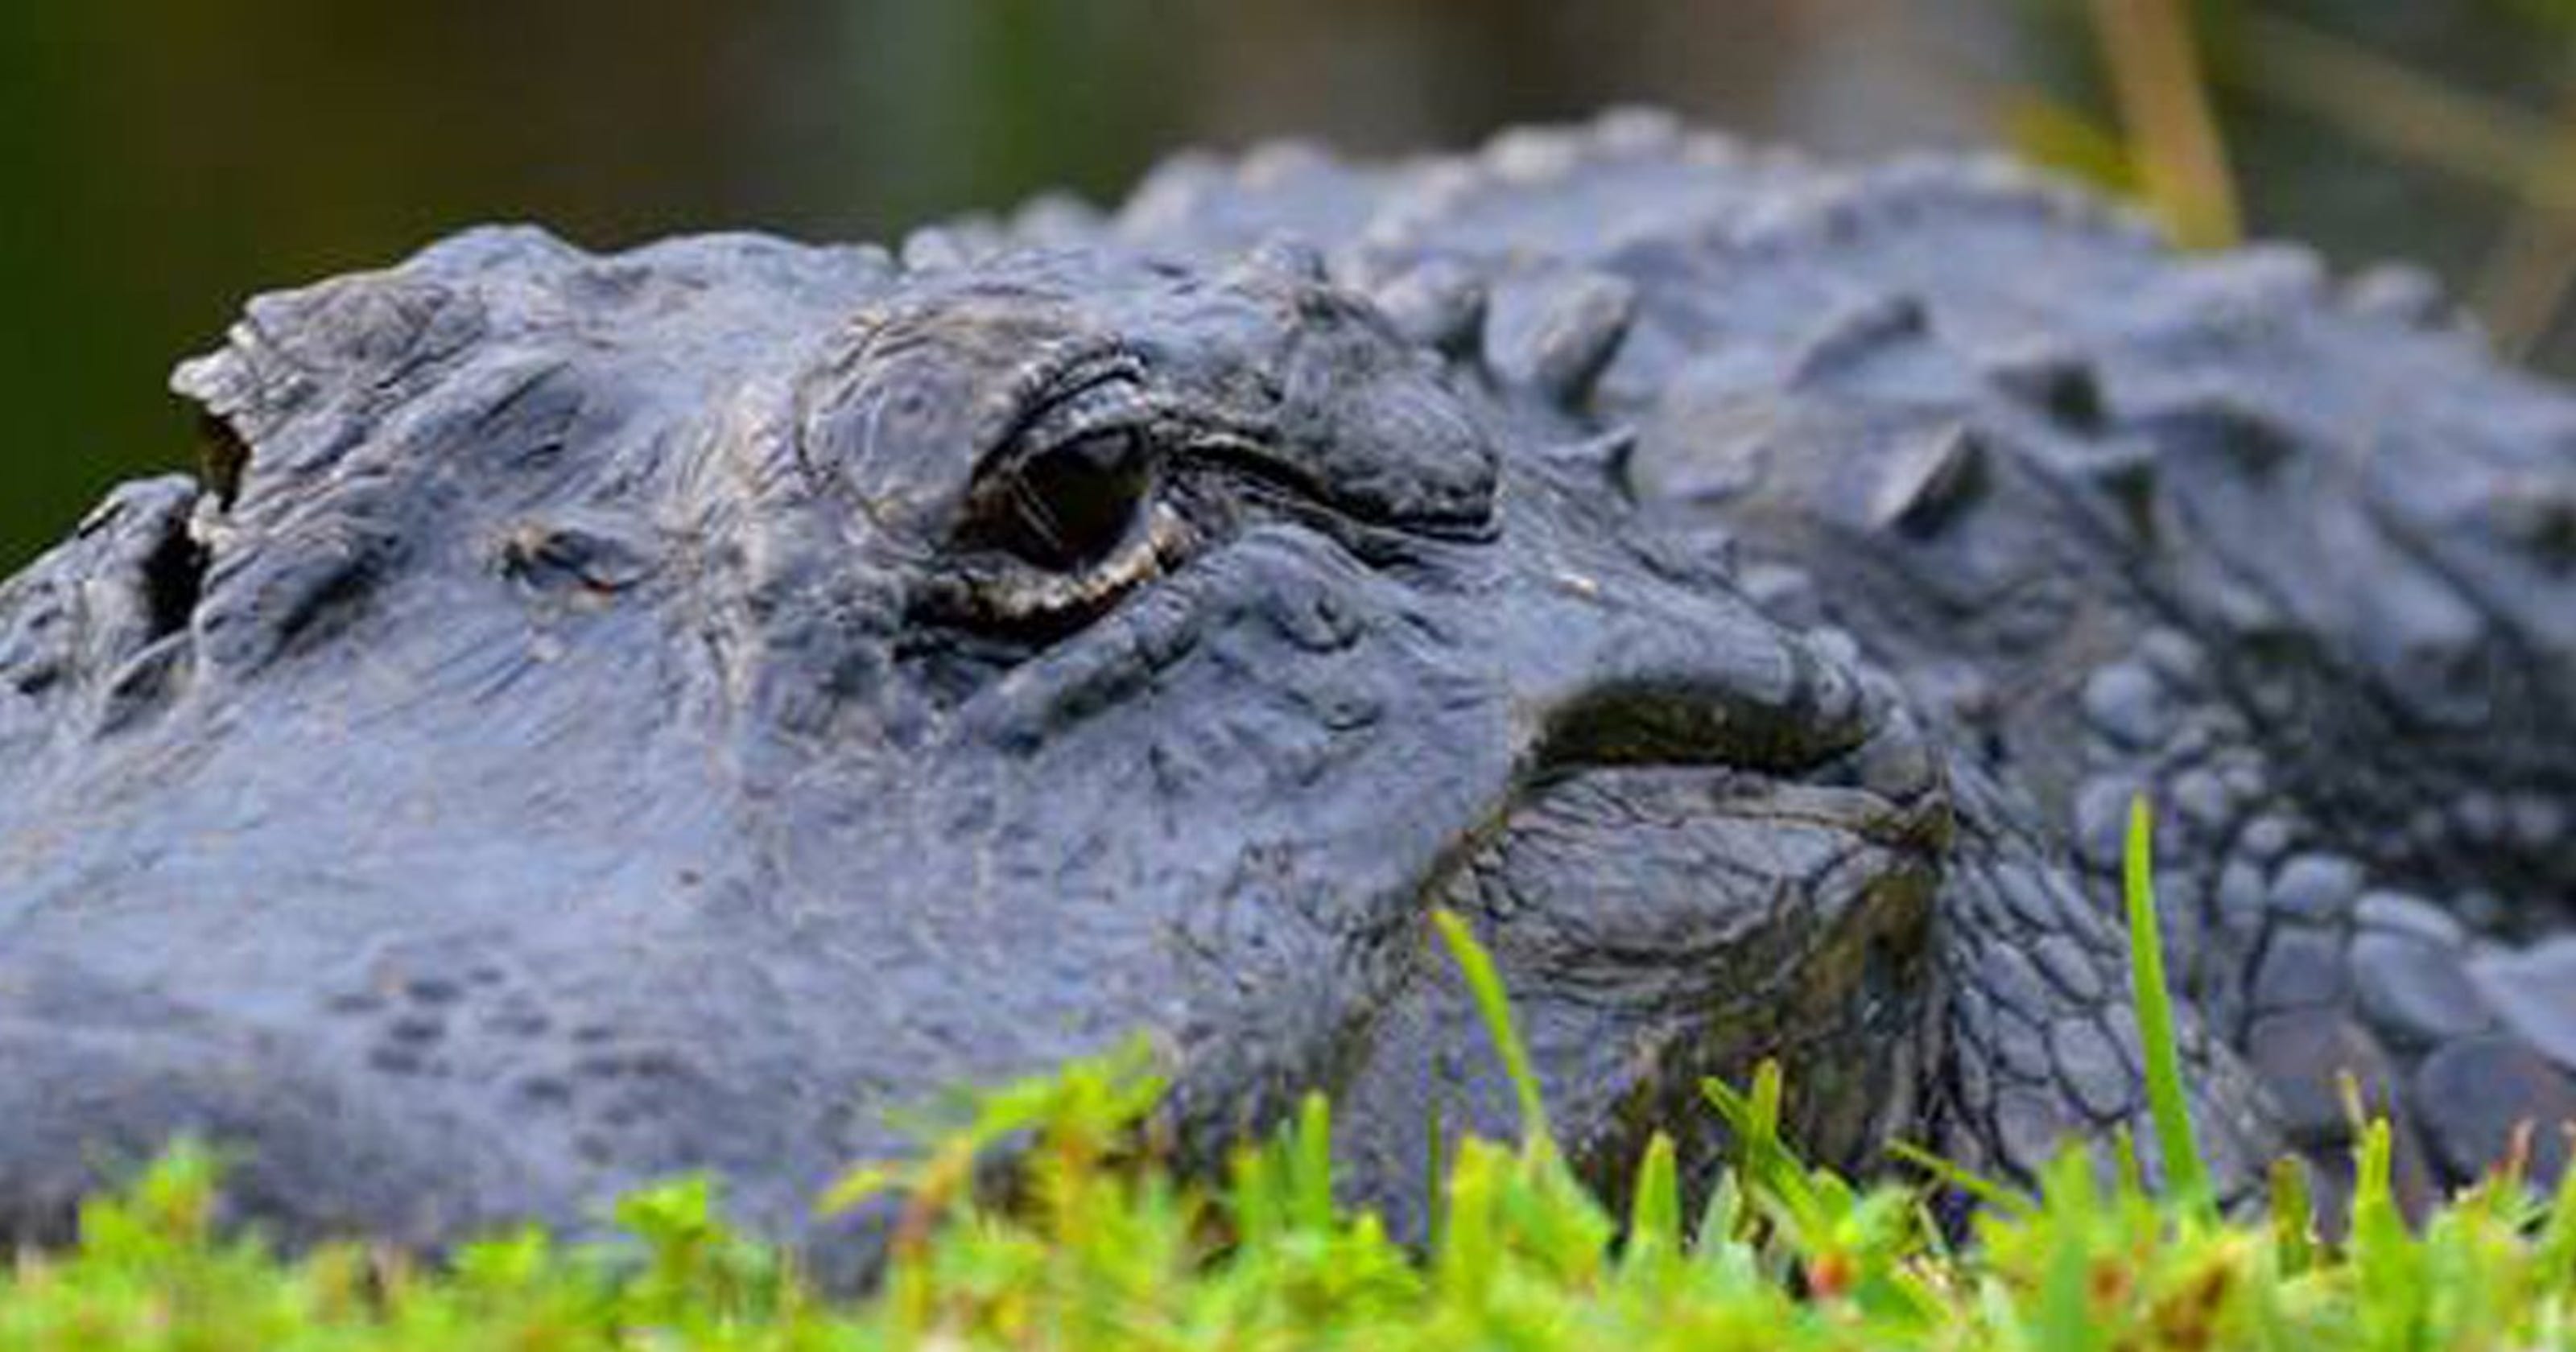 Tips for living near alligators in Florida 